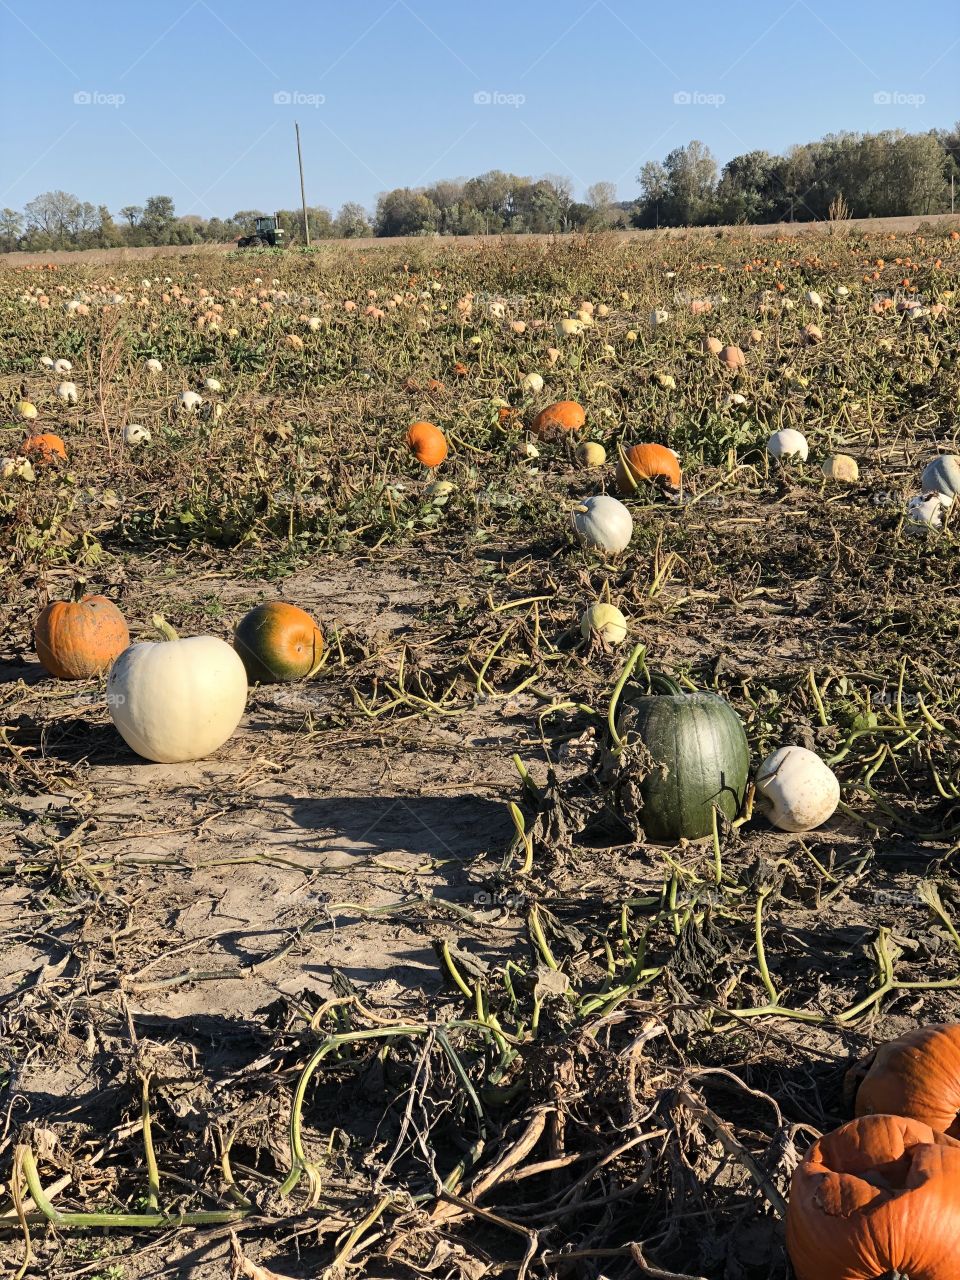 Fall pumpkin patch with assorted pumpkins. White, green and orange pumpkins